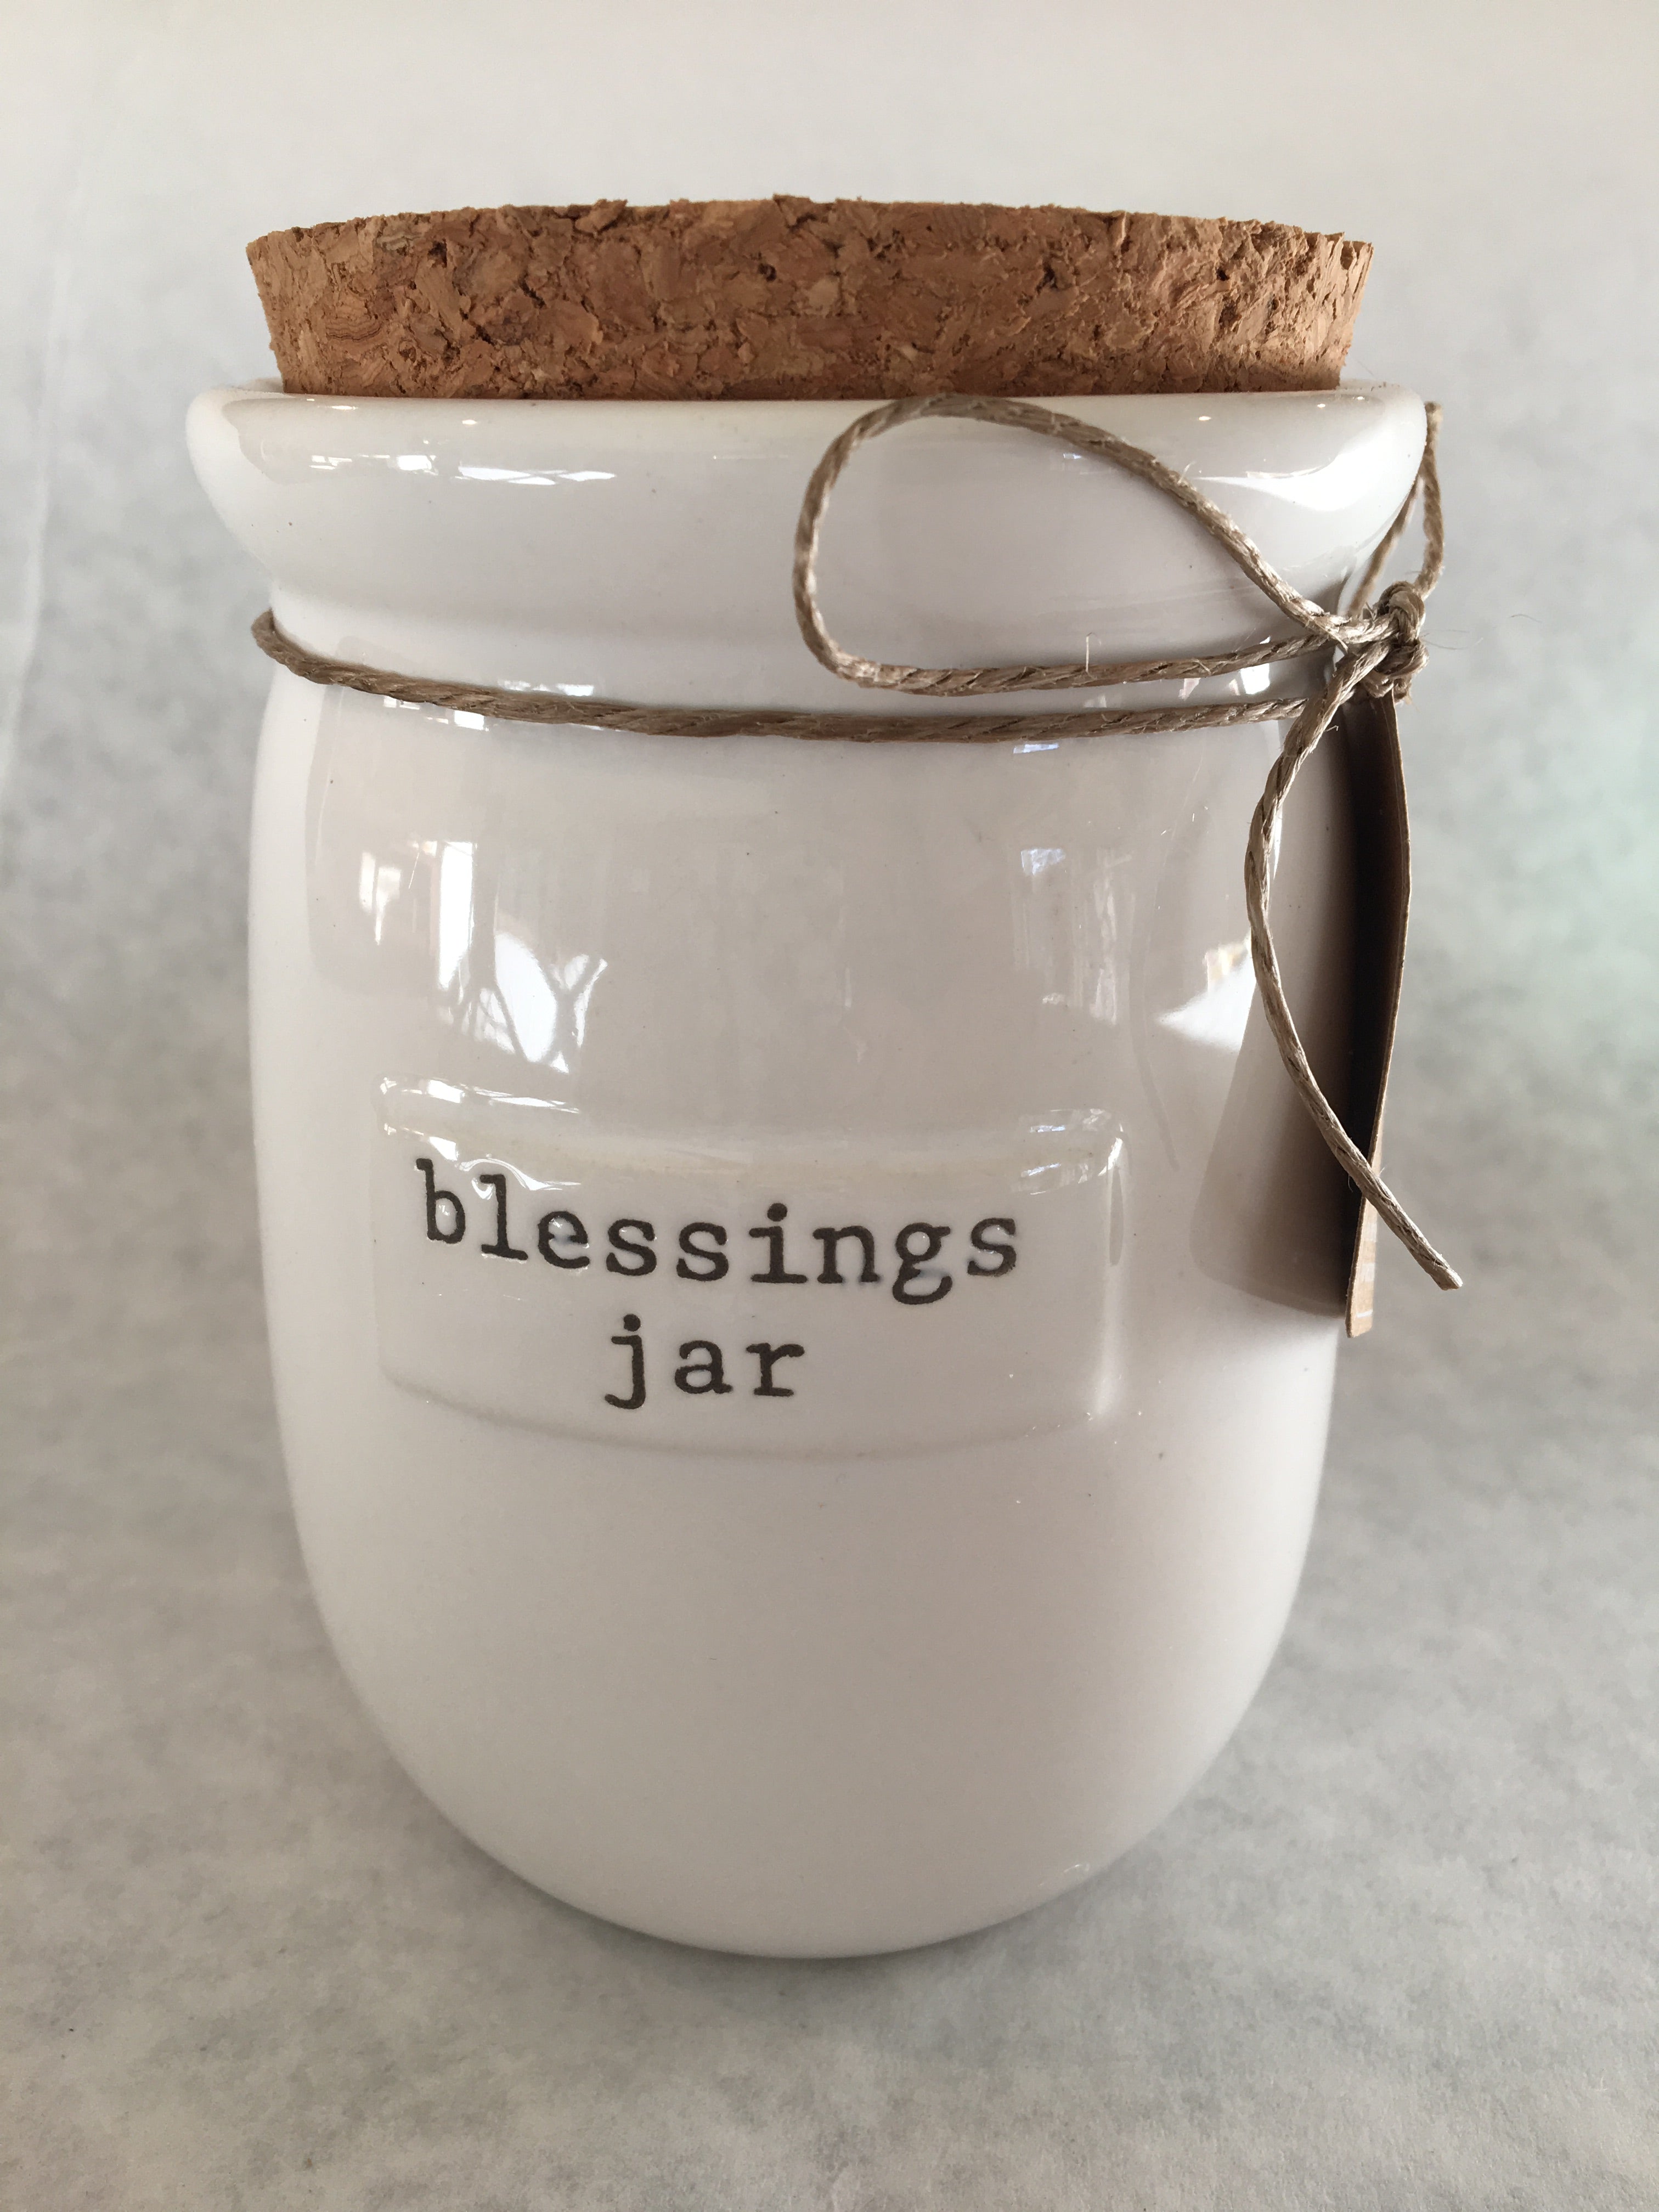 blessings Jar